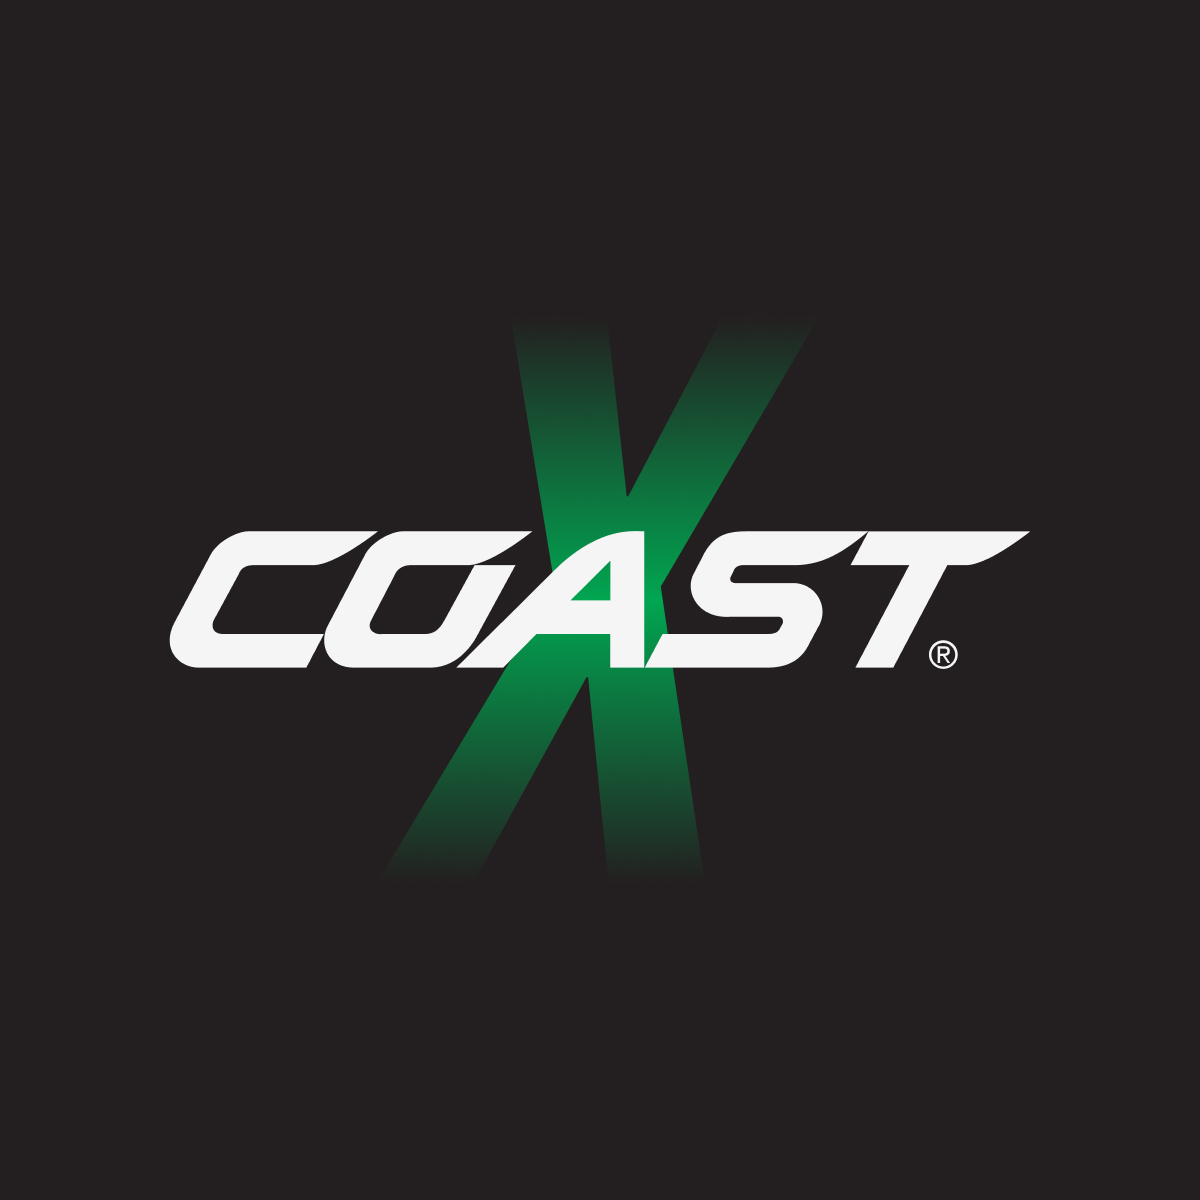 www.coastzx.com